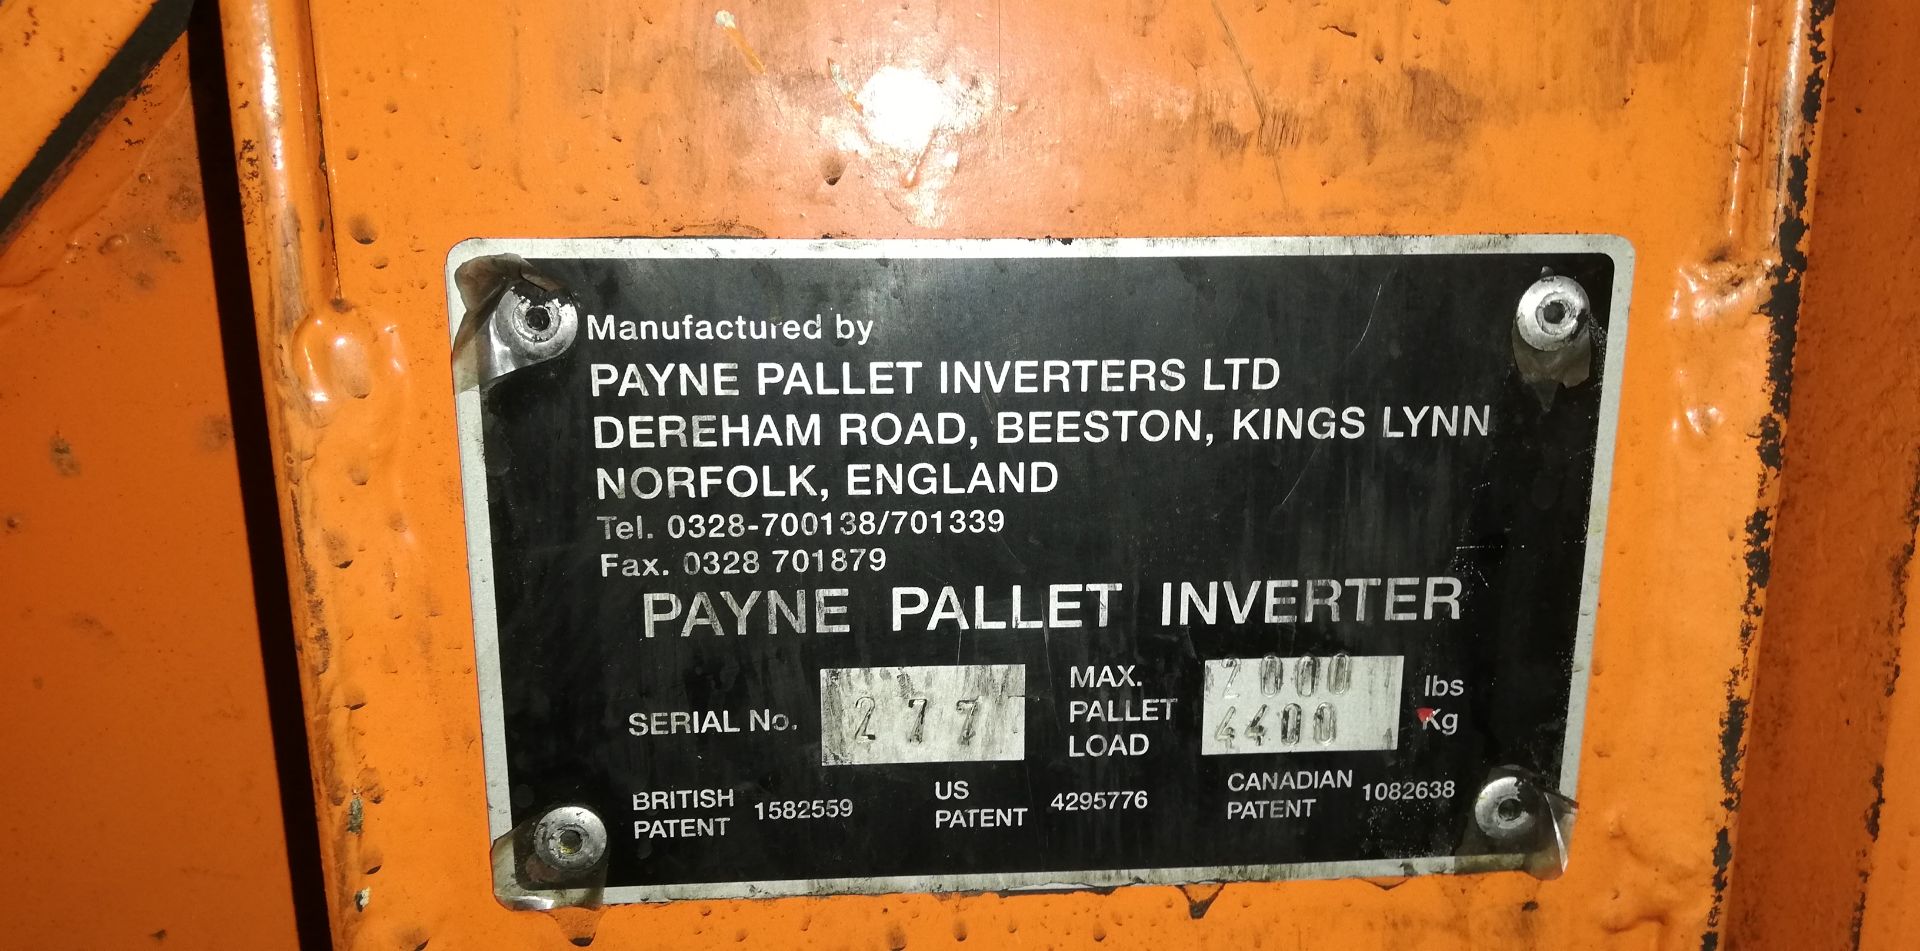 Payne Pallet Inverters Pallet Turner, serial no. 277, max load 2000kg (lot located at Bedfords - Image 5 of 5